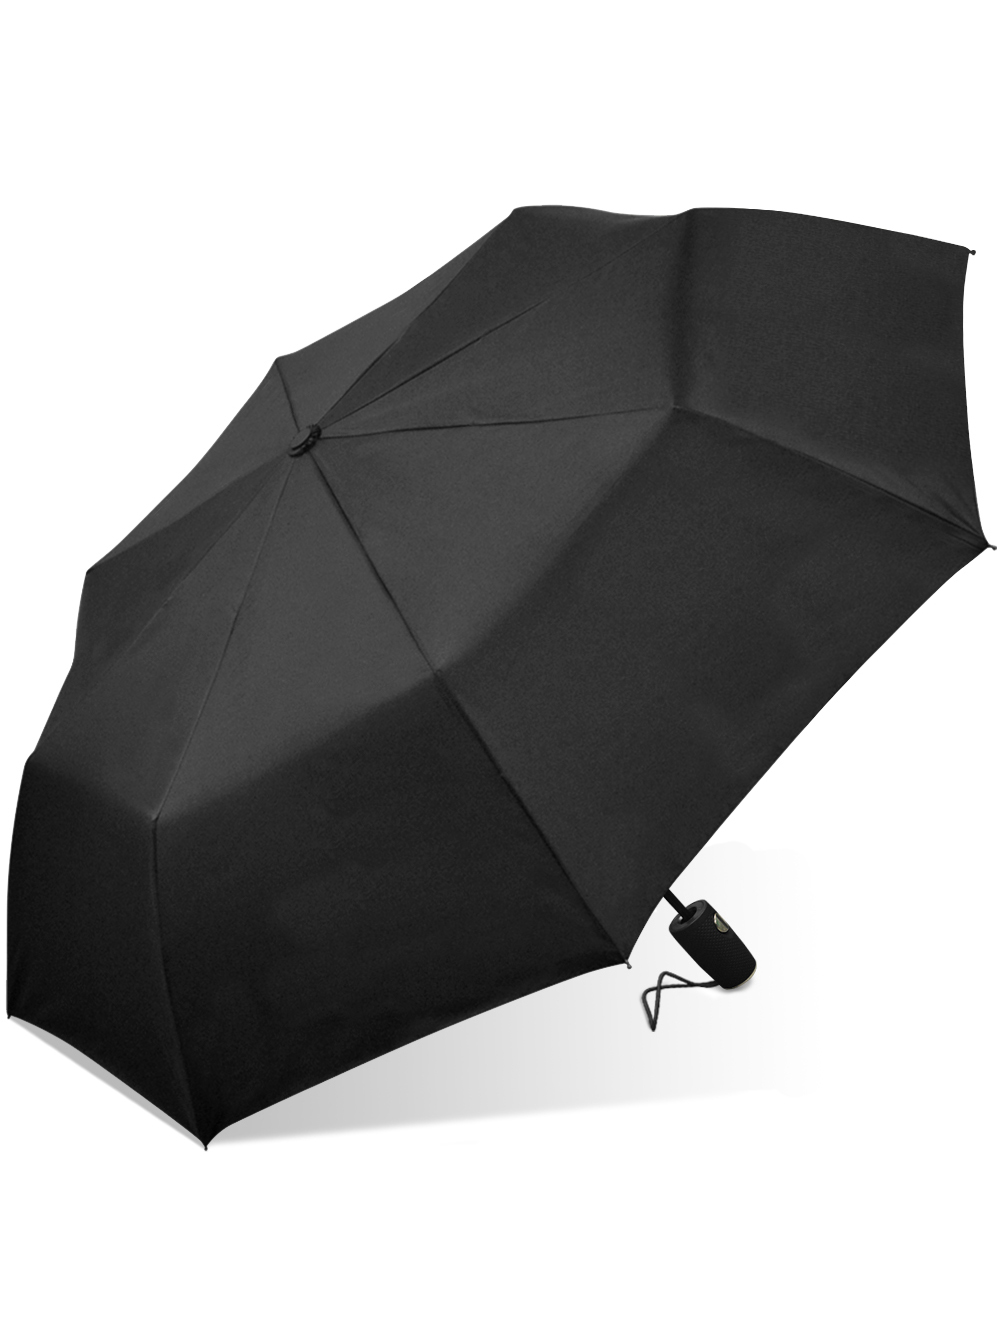 Weather Station Automatic Super Mini Rain Umbrella Black - image 1 of 5